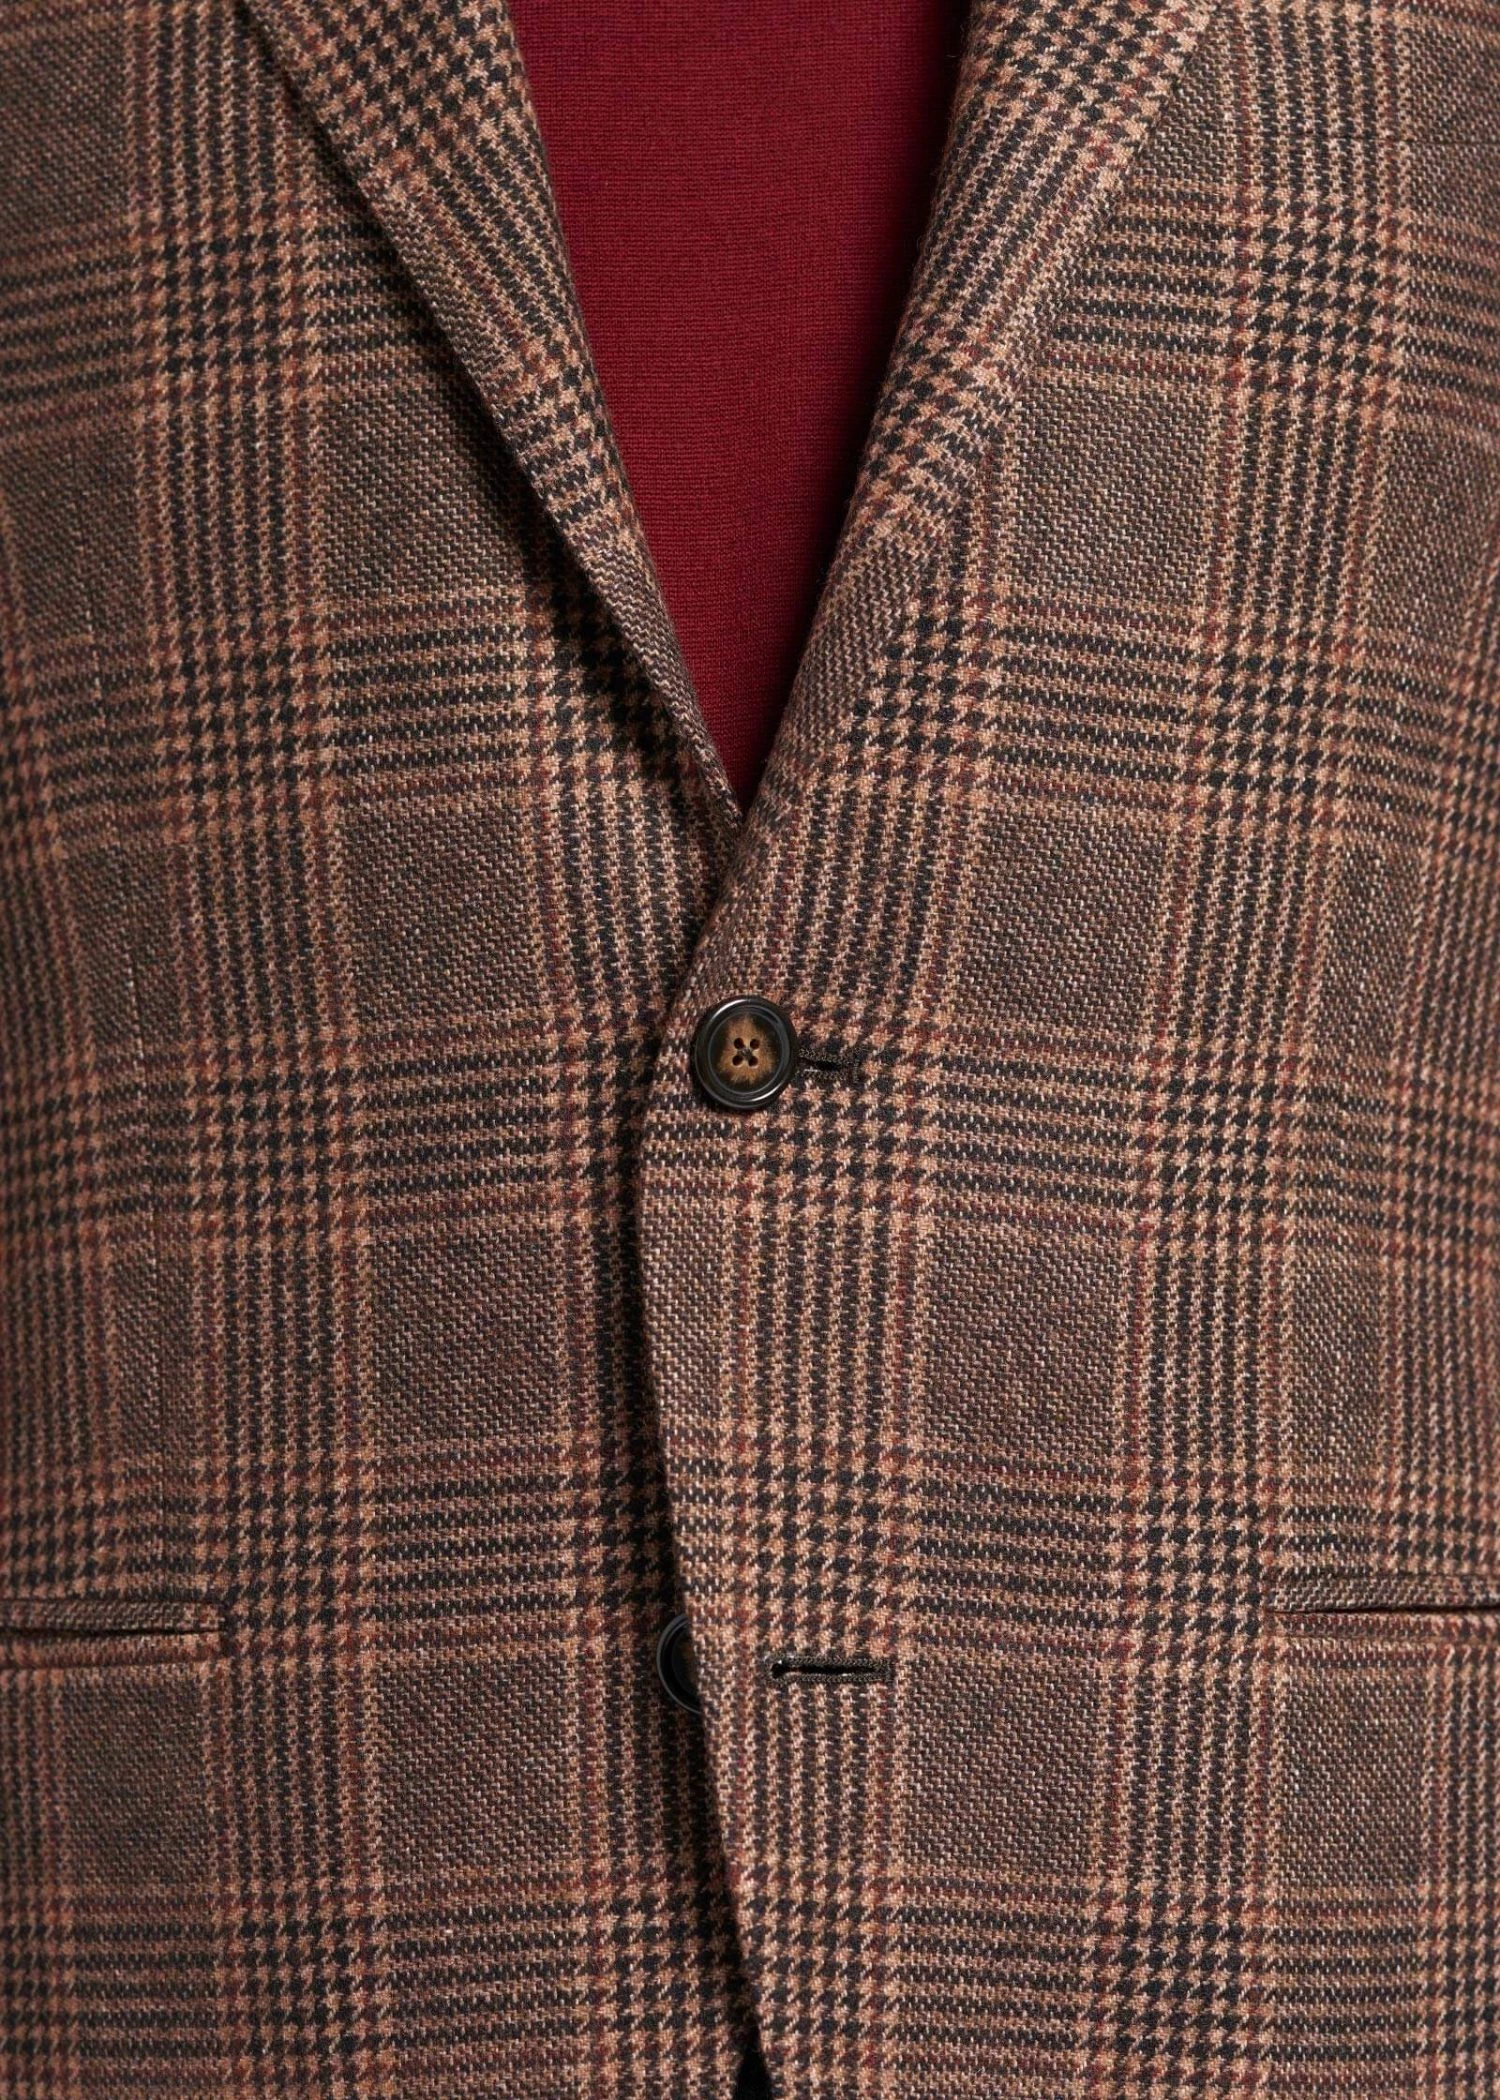 Brown-Glen-Plaid-Jacketing-Mond-Custom-Jacket-Details-Close-up